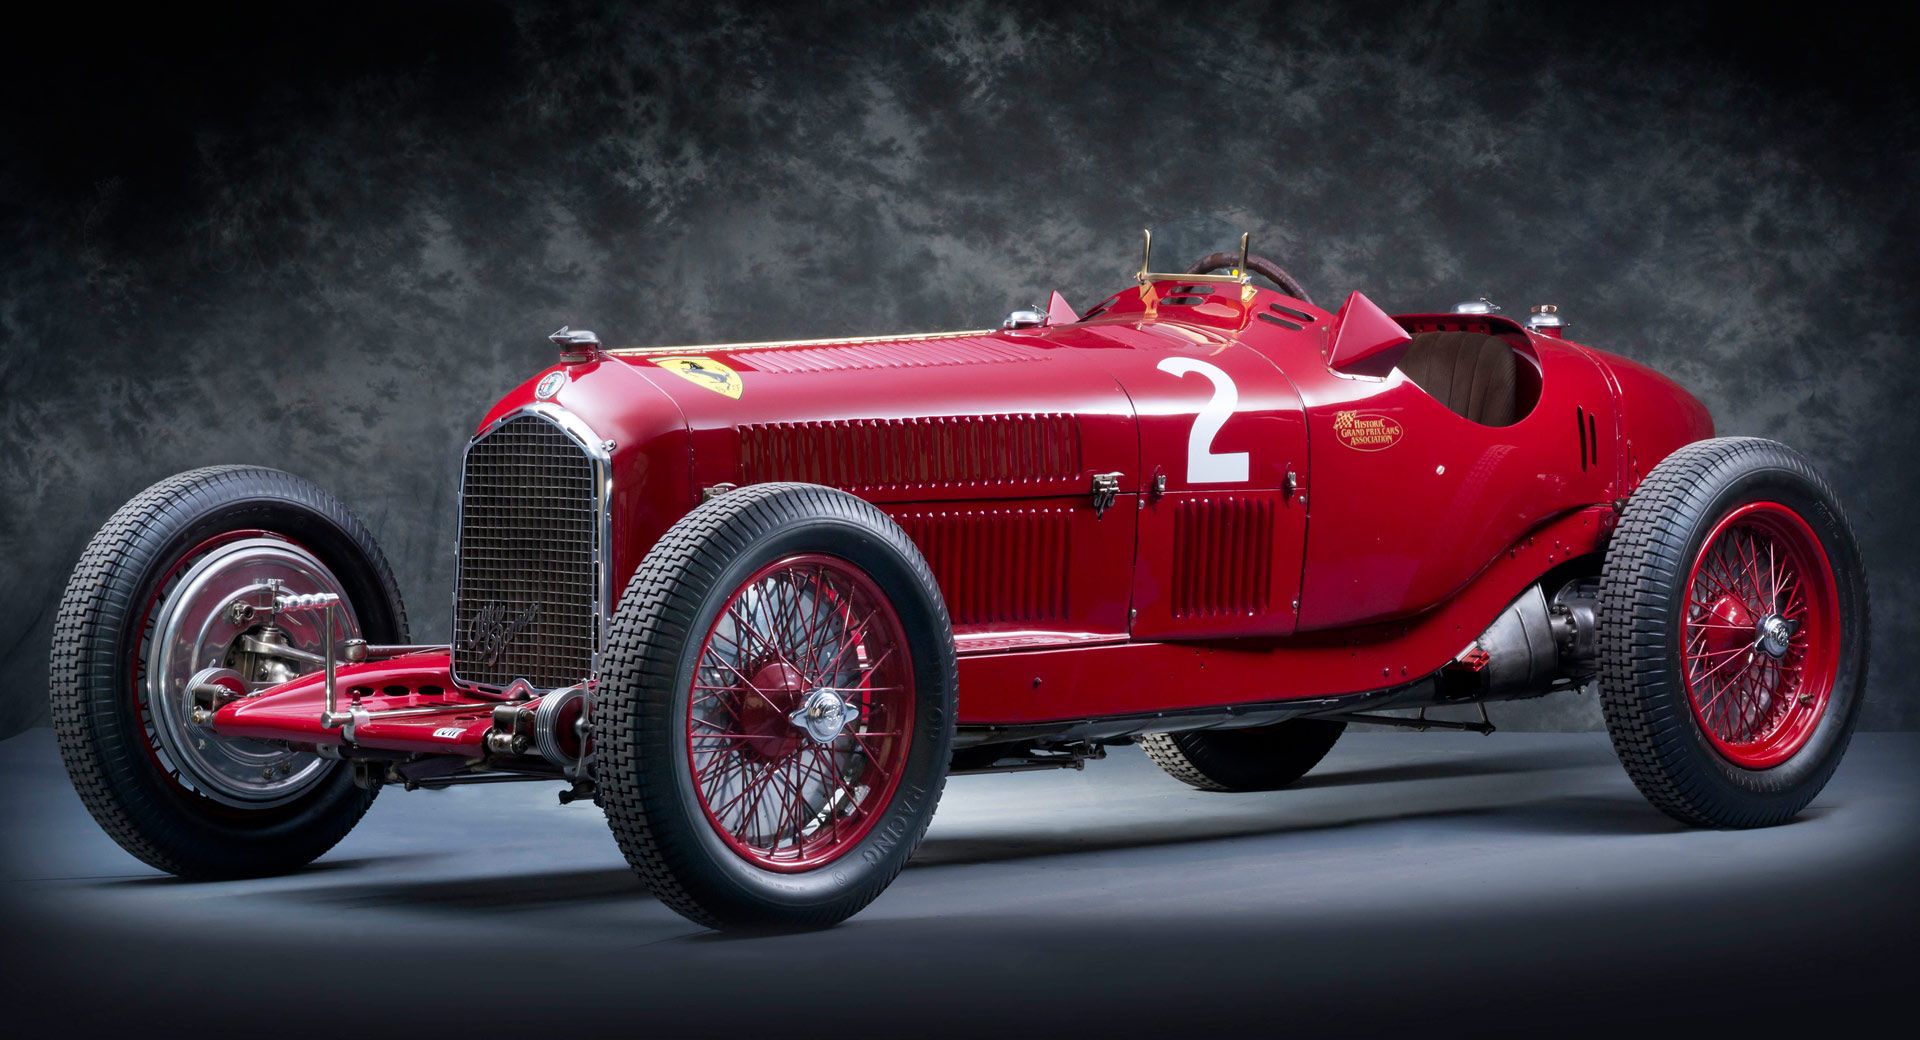 Enzo Ferrari once used car